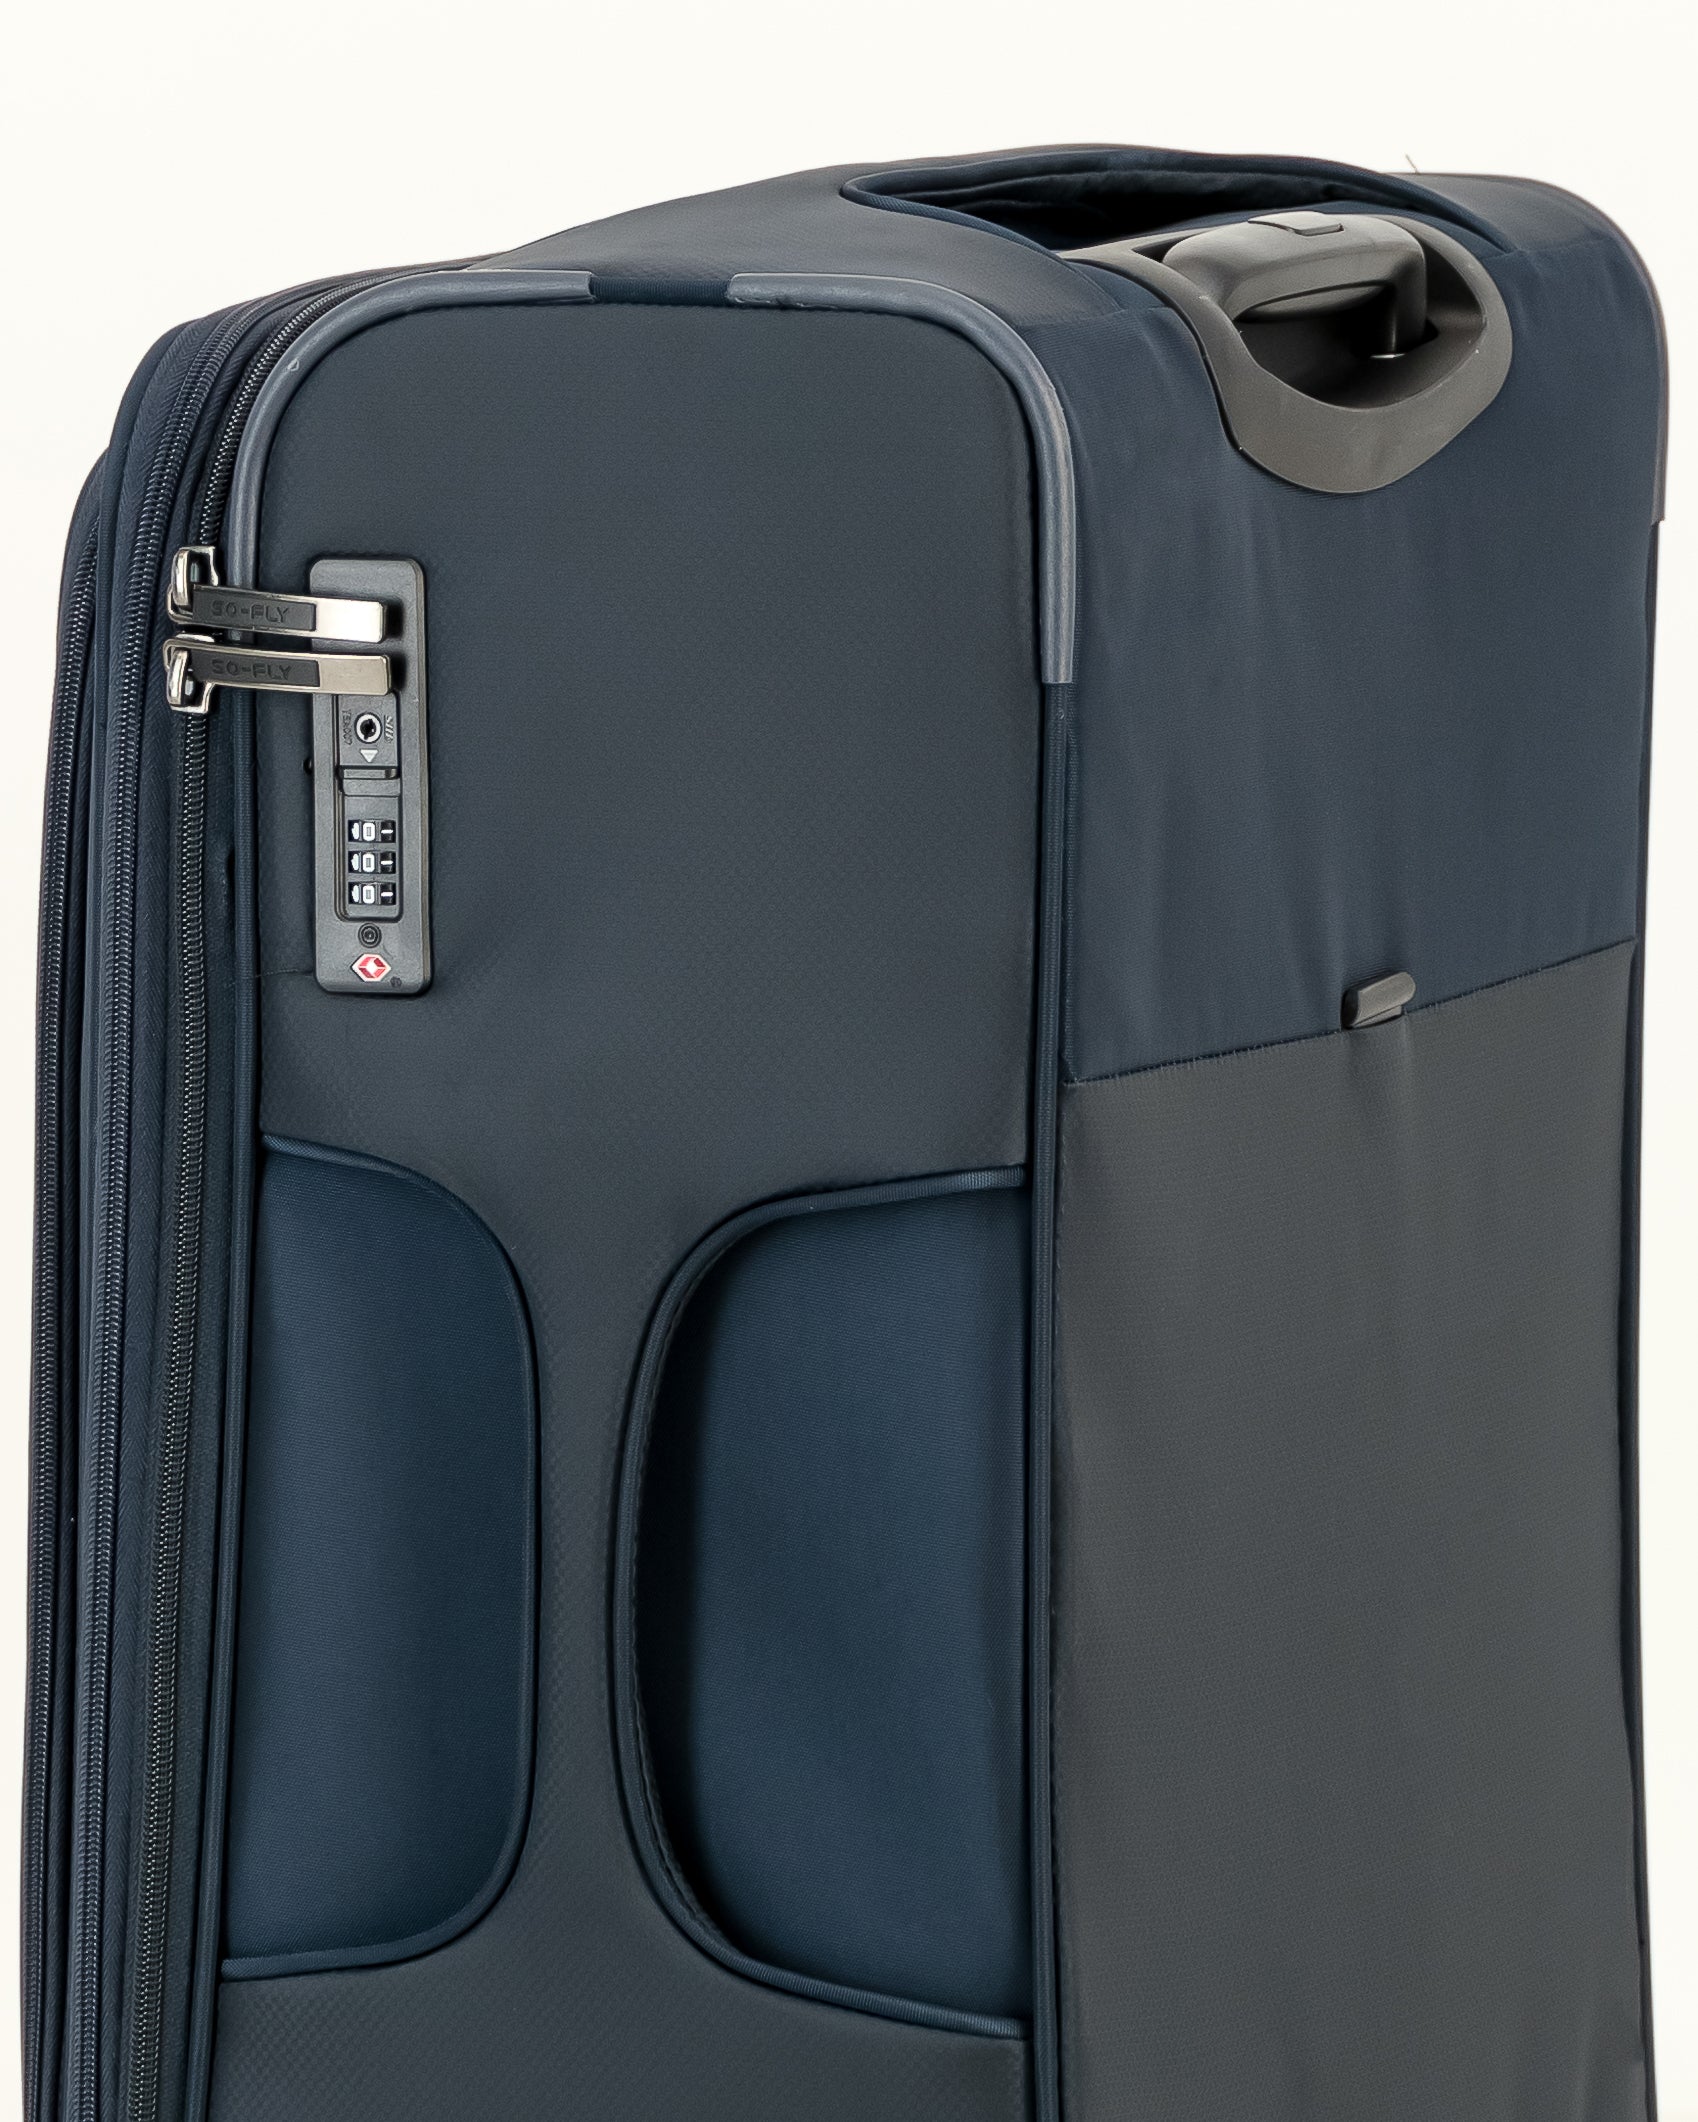 So-Fly X-Lite Medium 4 Wheel Spinner Suitcase